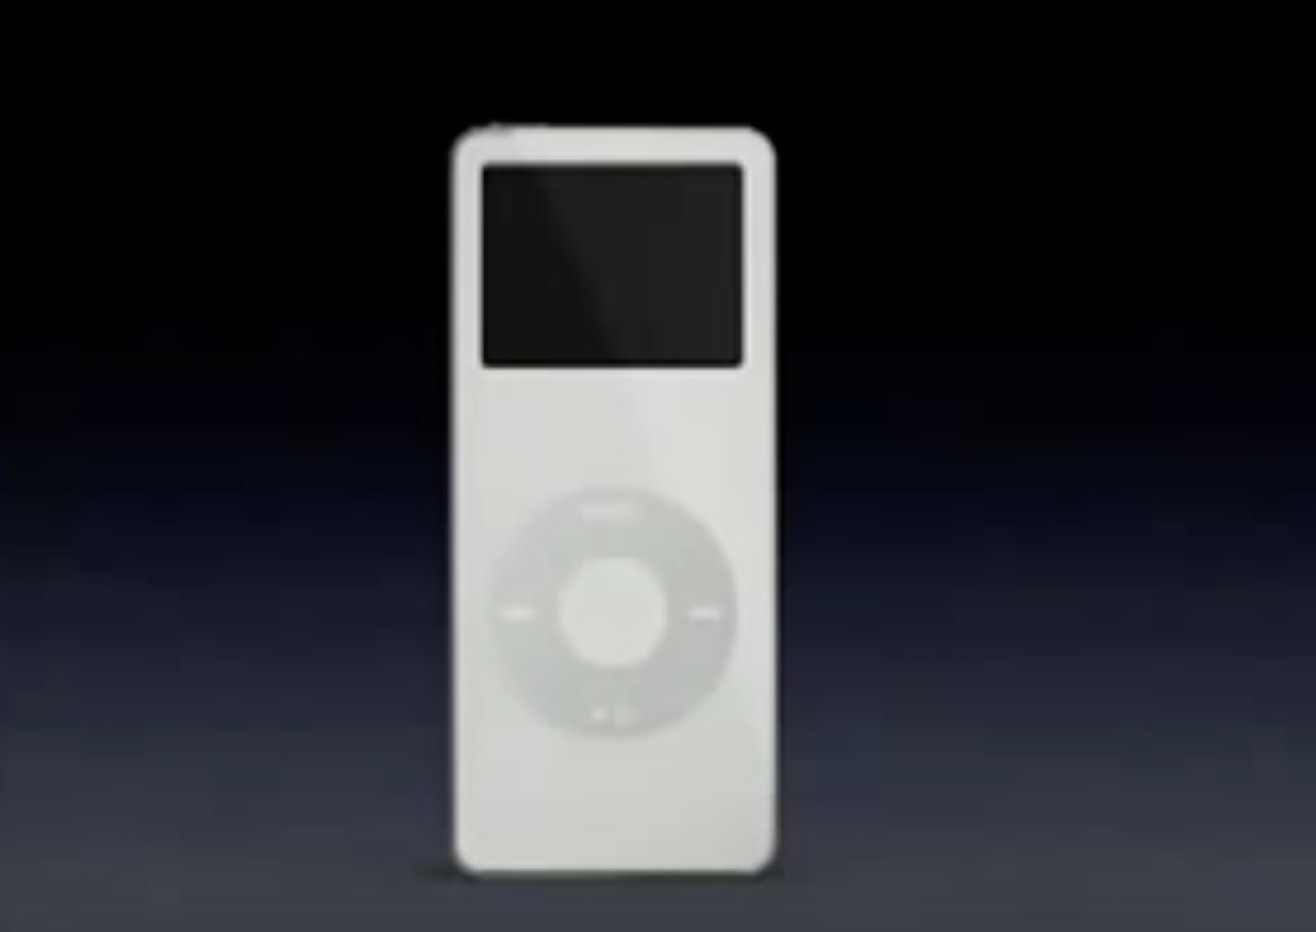 The first-generation iPod nano